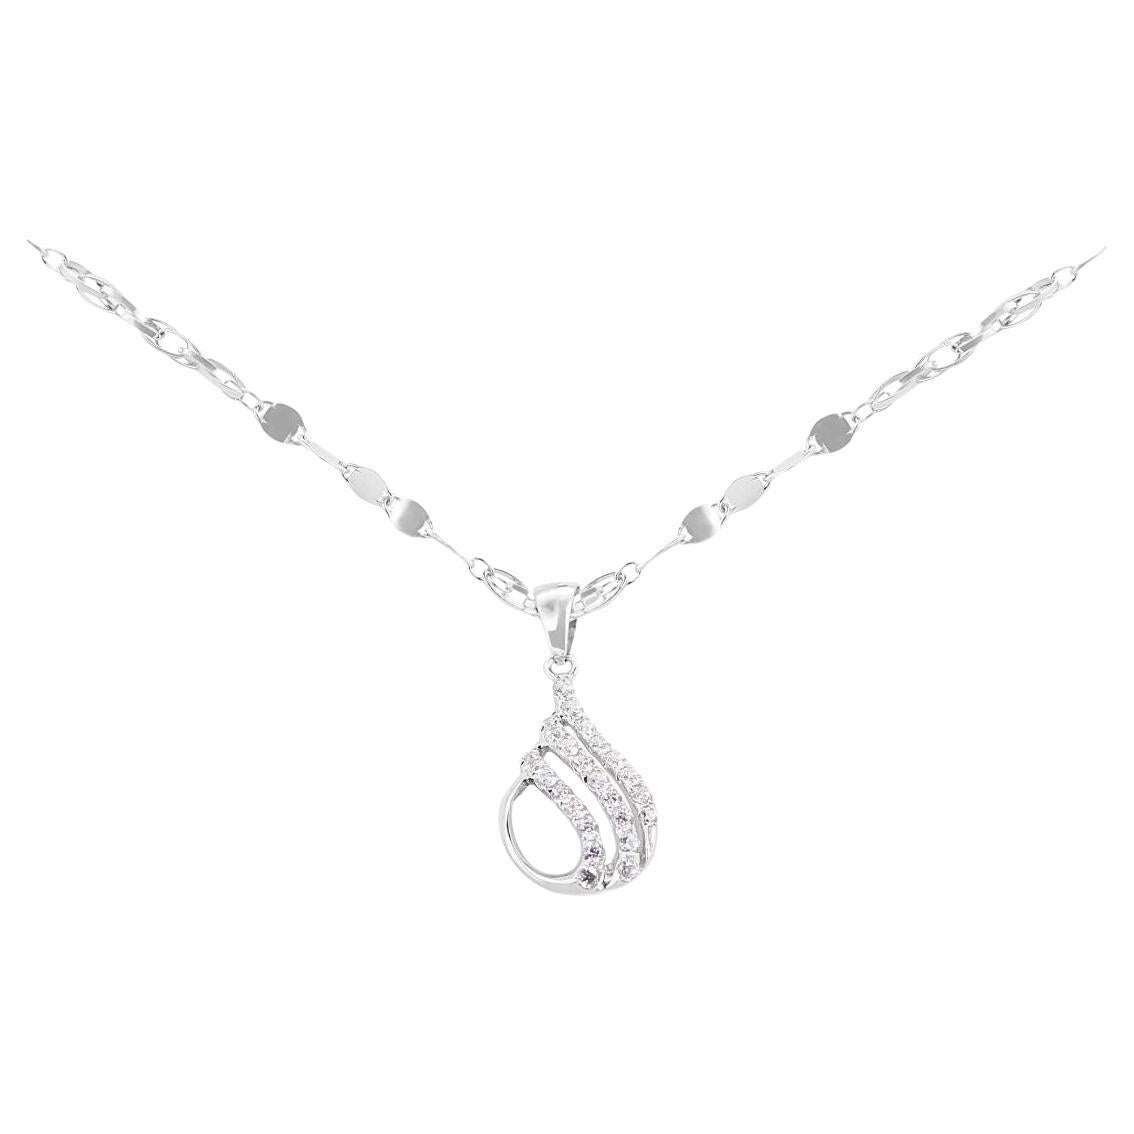 Elegant 0.25ct Tear Drop Diamond Necklace set in 18K White Gold For Sale